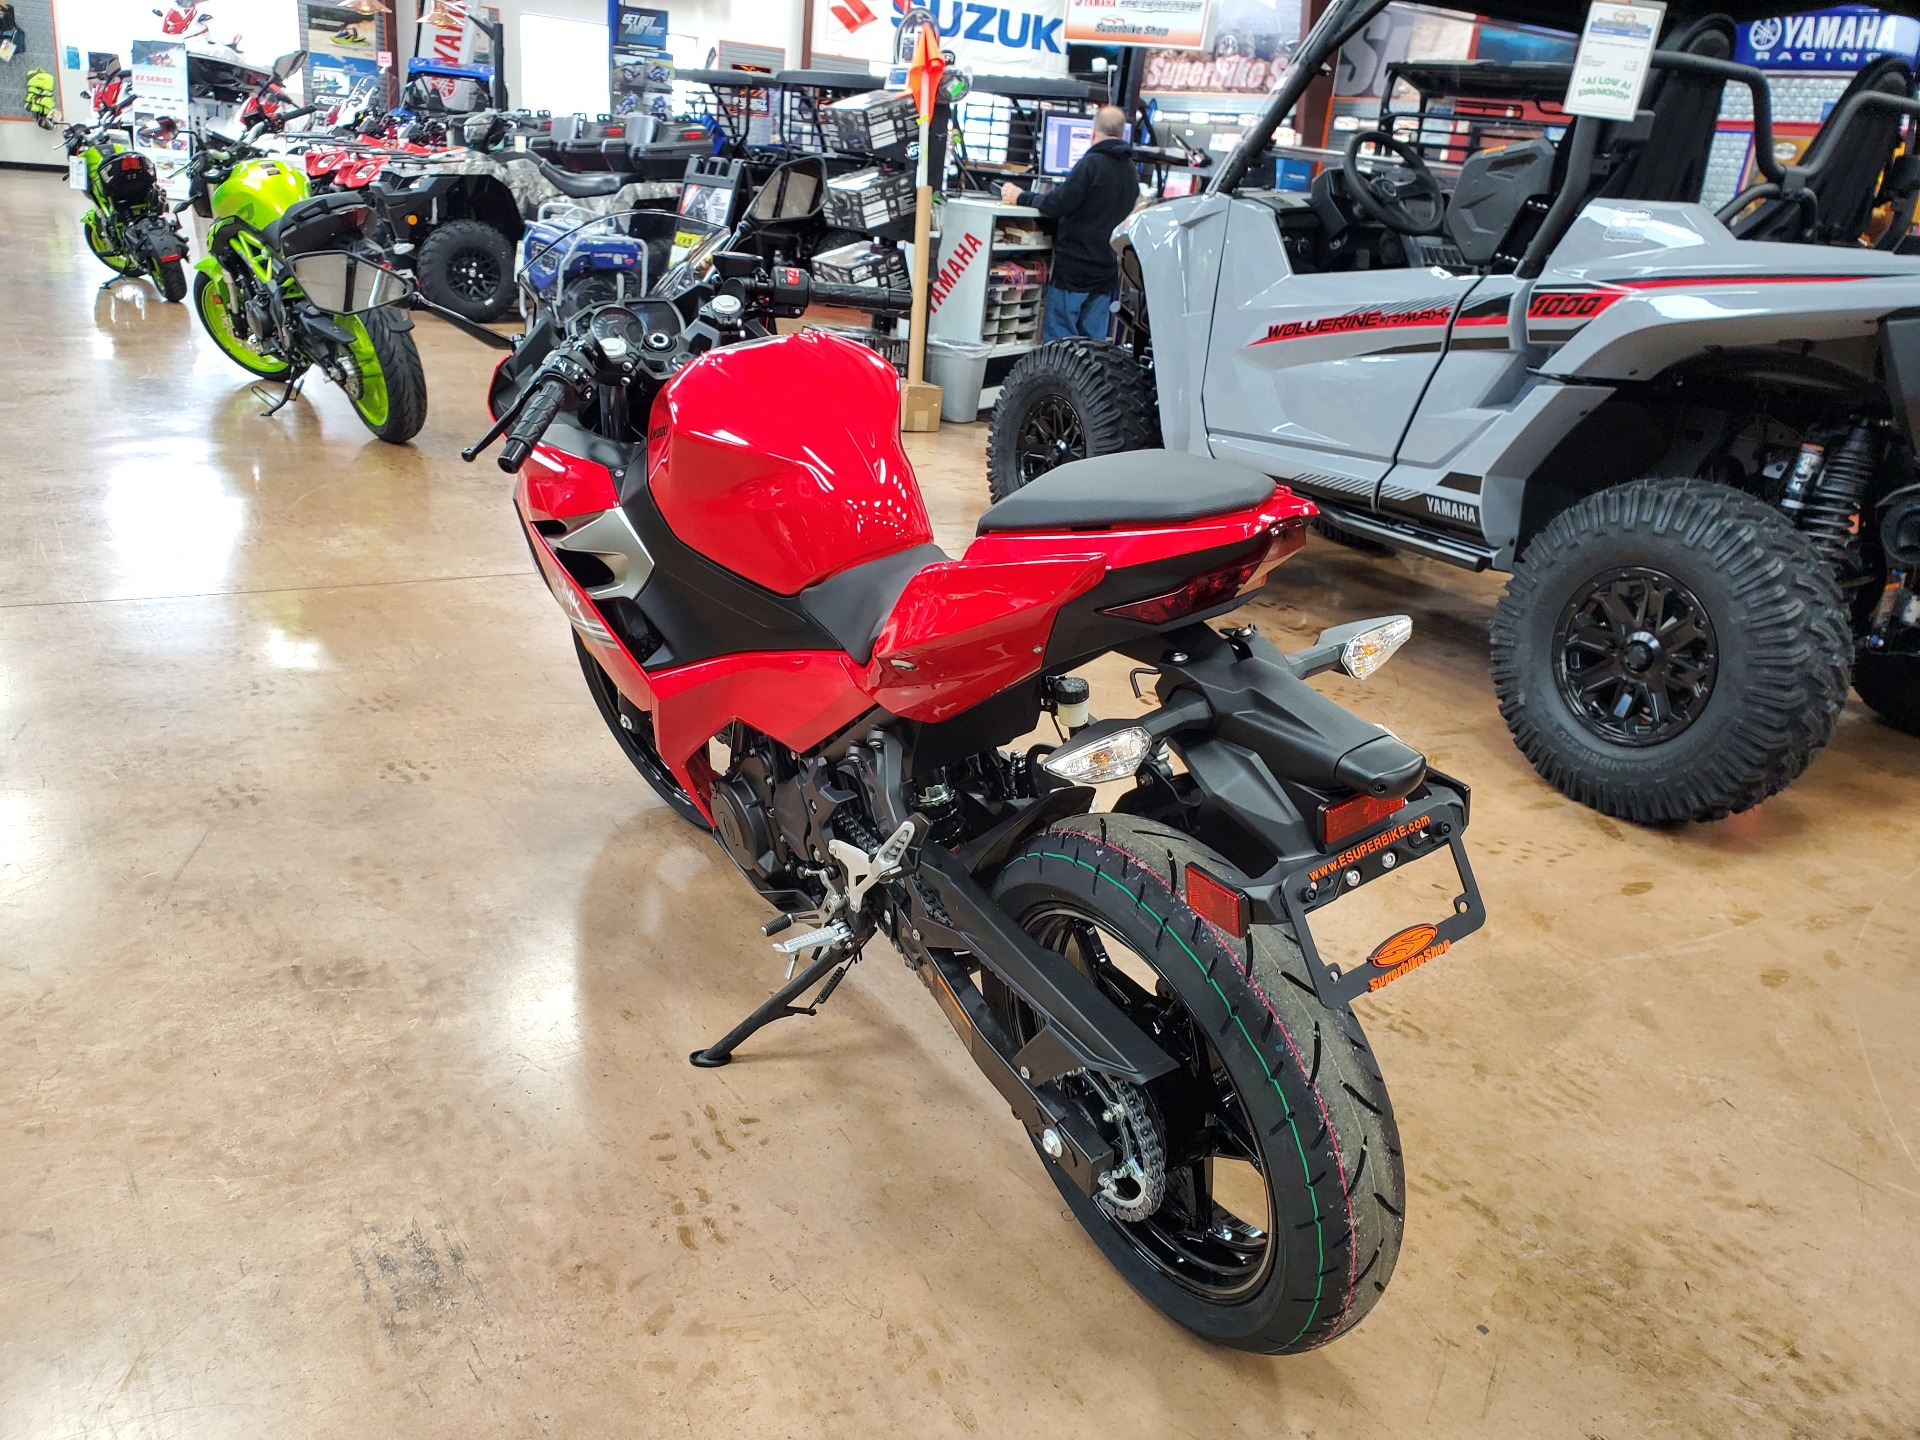 New 2021 Kawasaki Ninja 400 Motorcycles in Evansville, IN ...